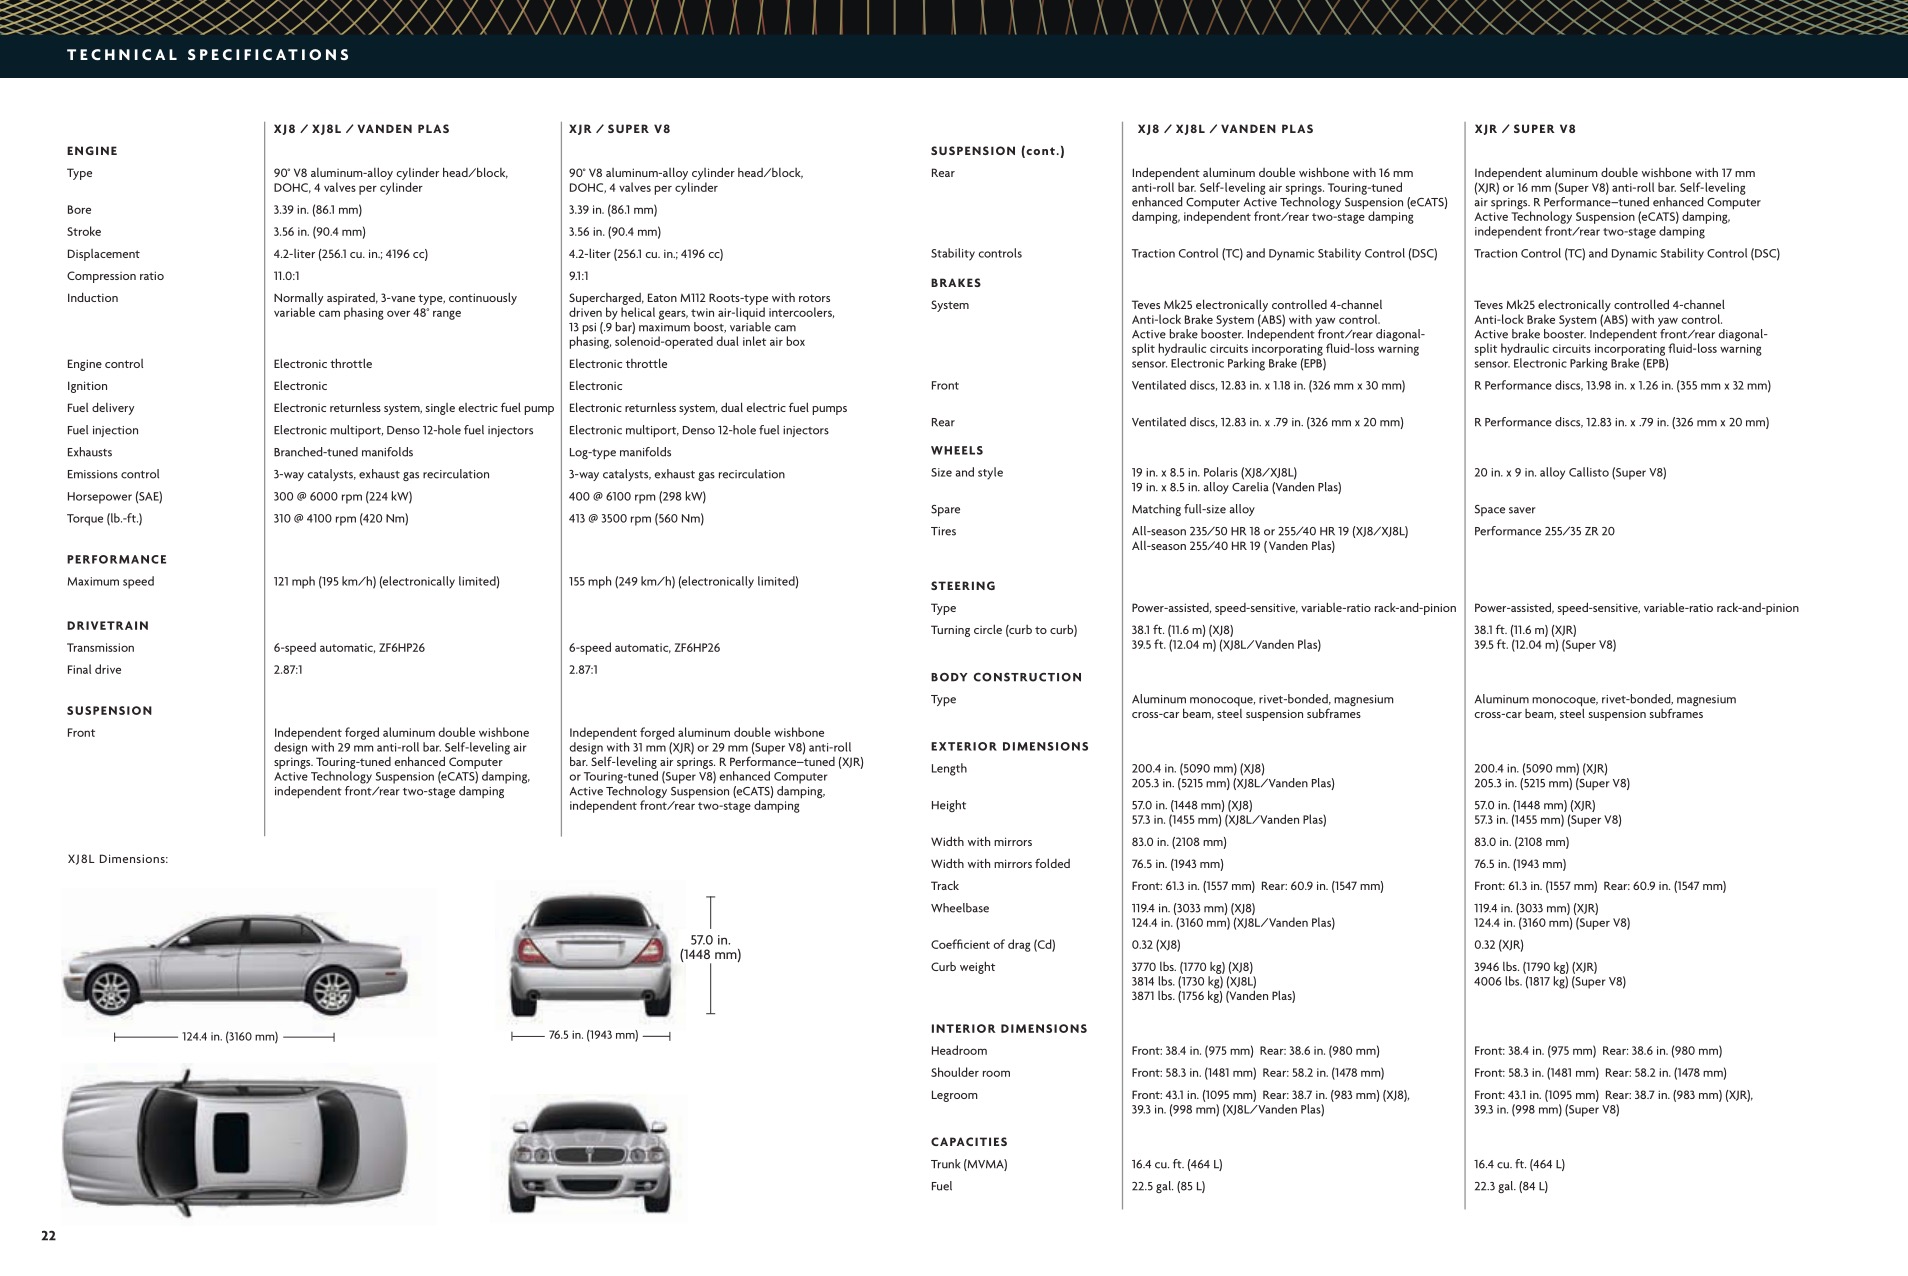 2009 Jaguar XJ Brochure Page 31